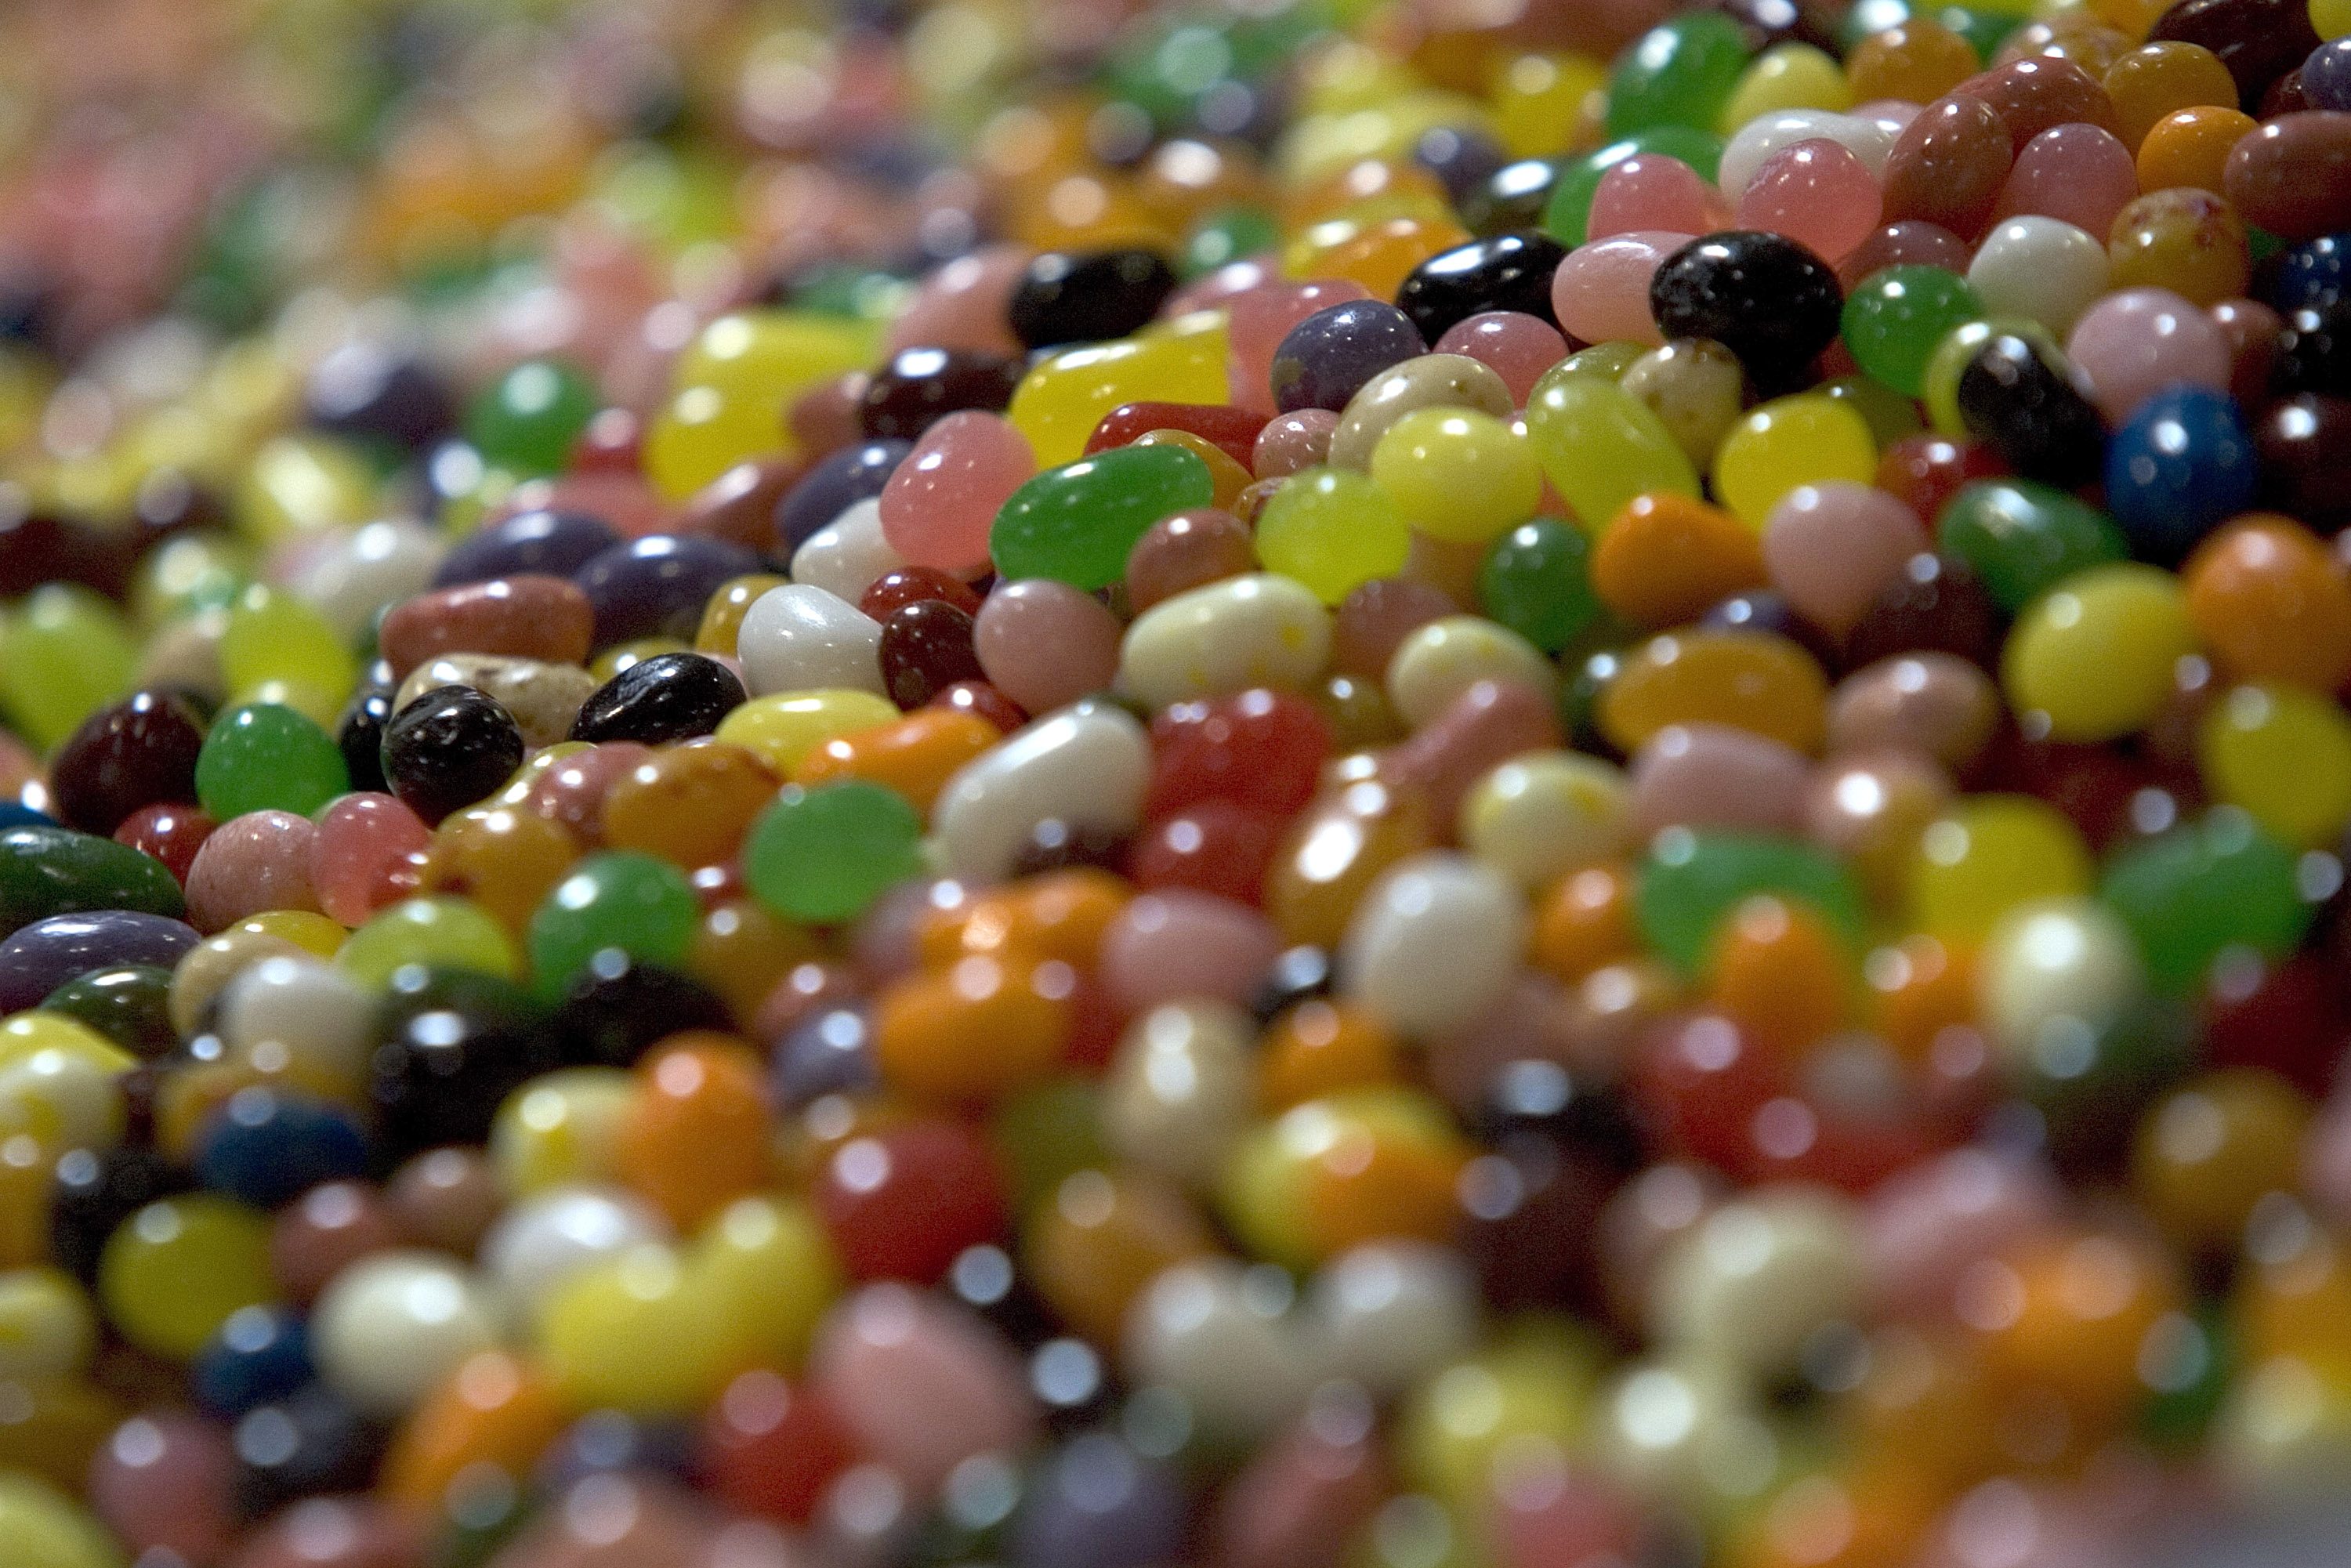 Numerous jelly beans